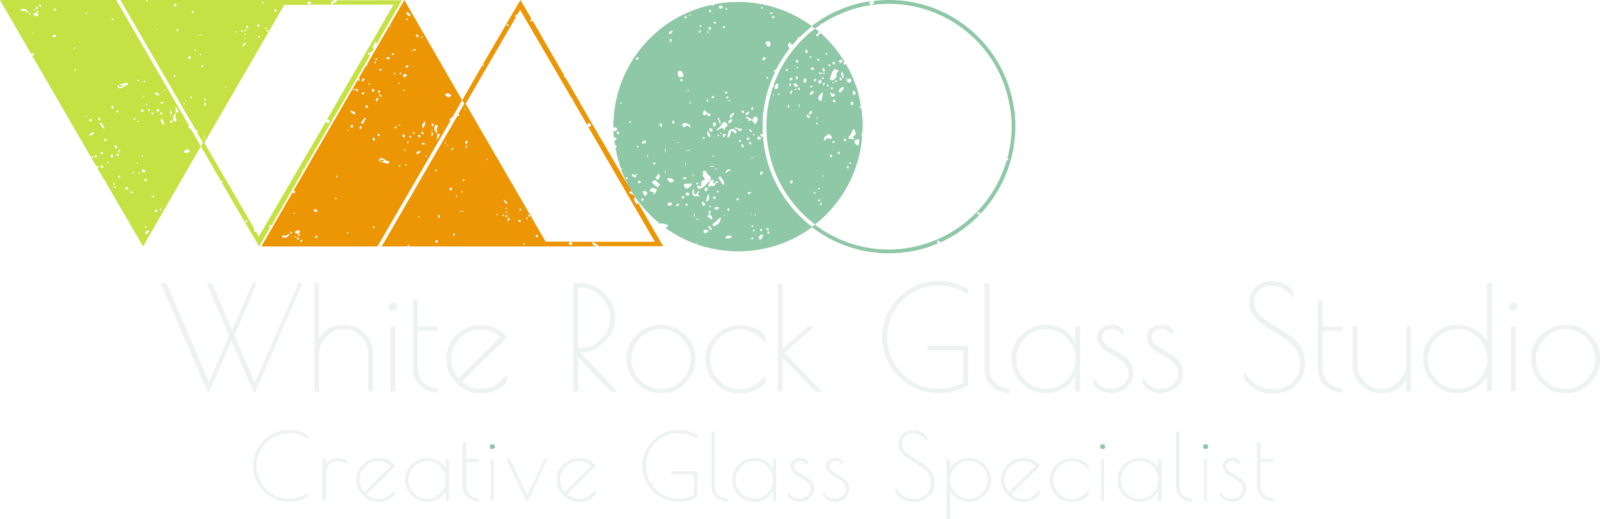 White/Rock Glass Studio